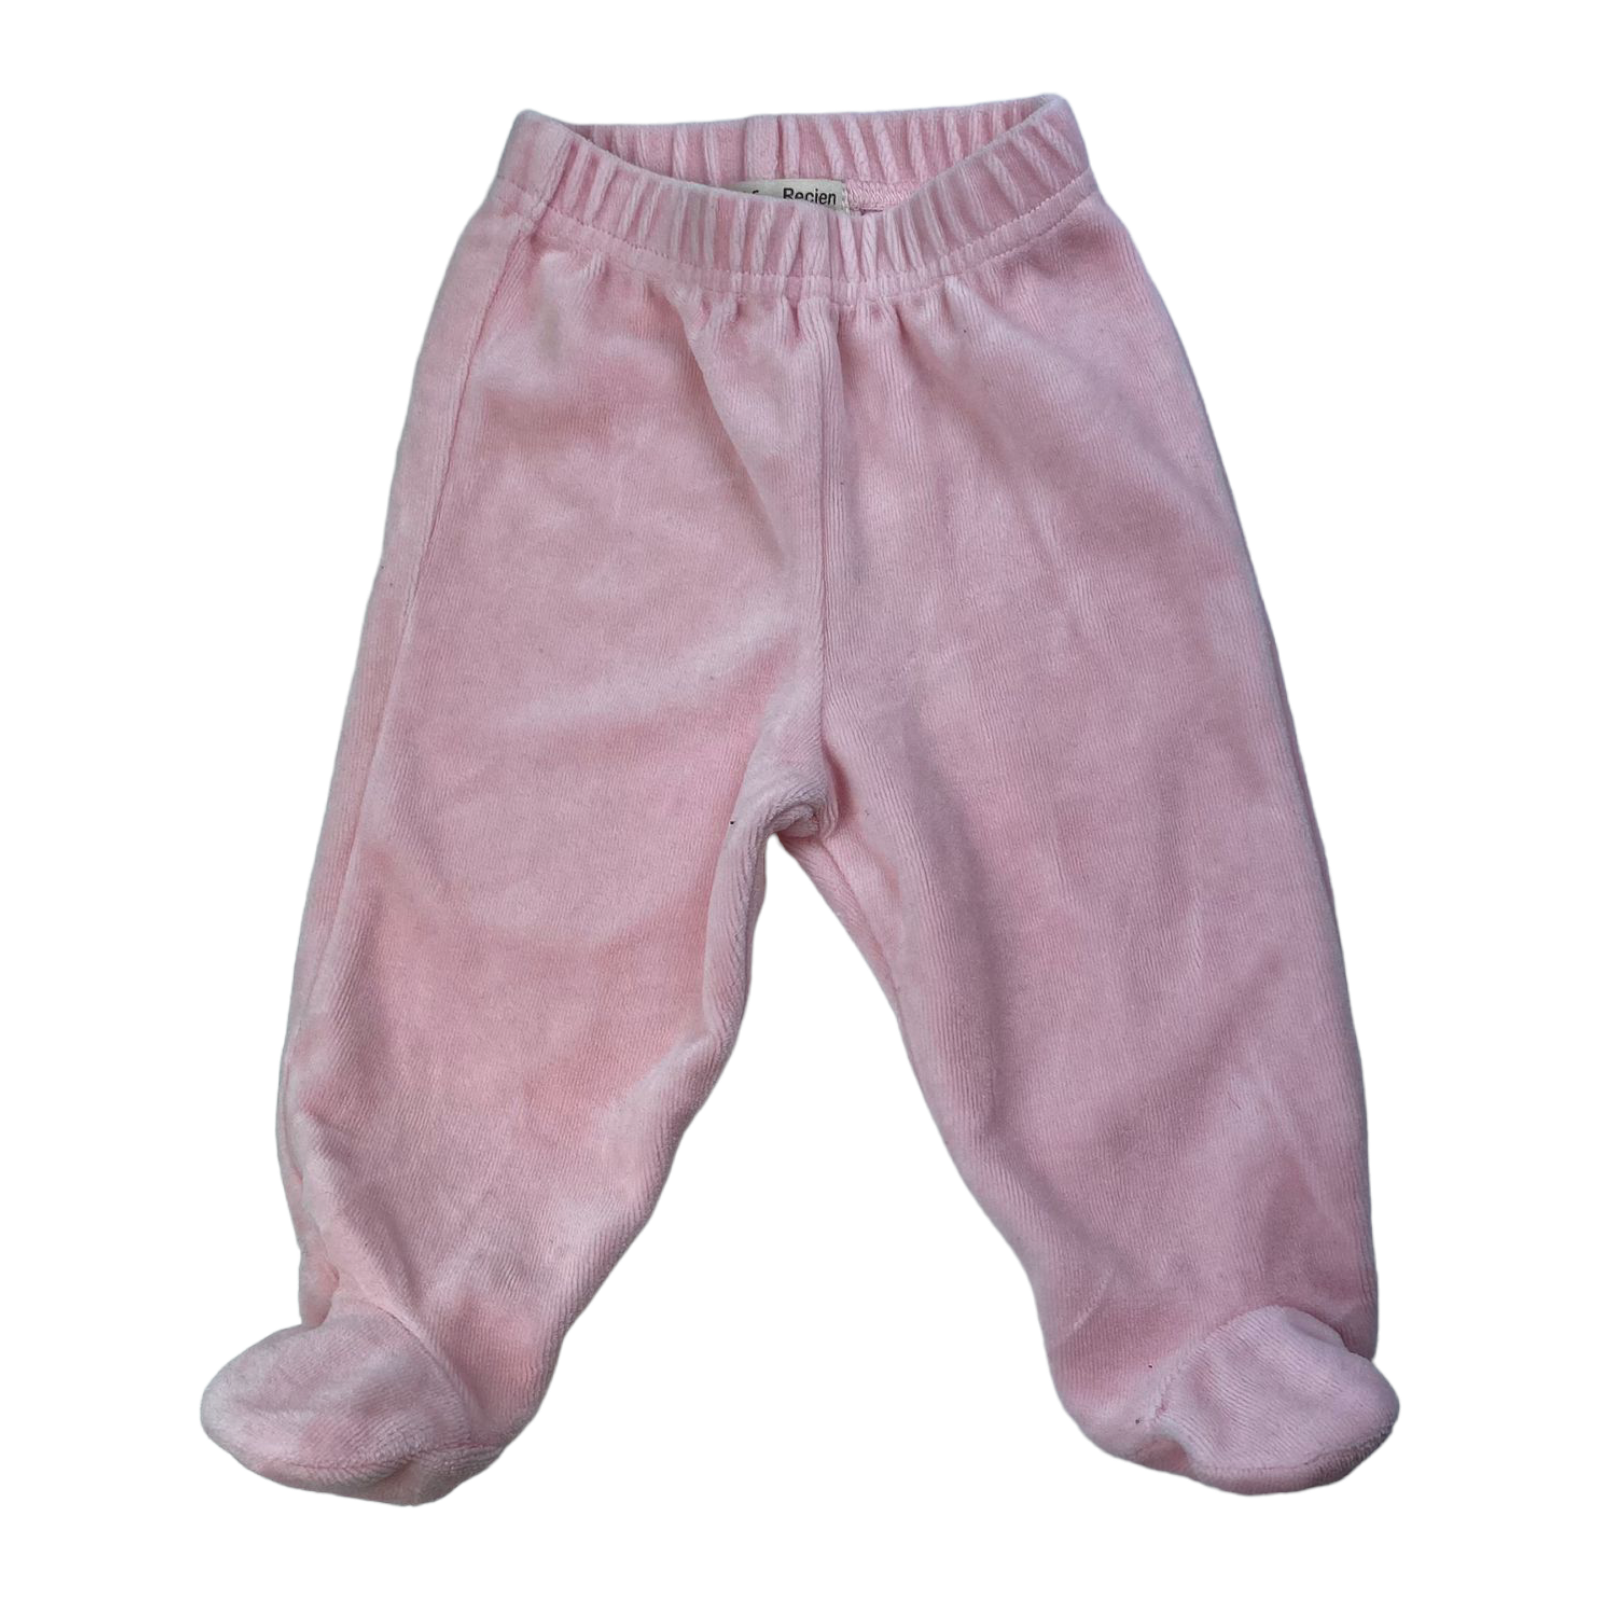 Panty de plush rosada